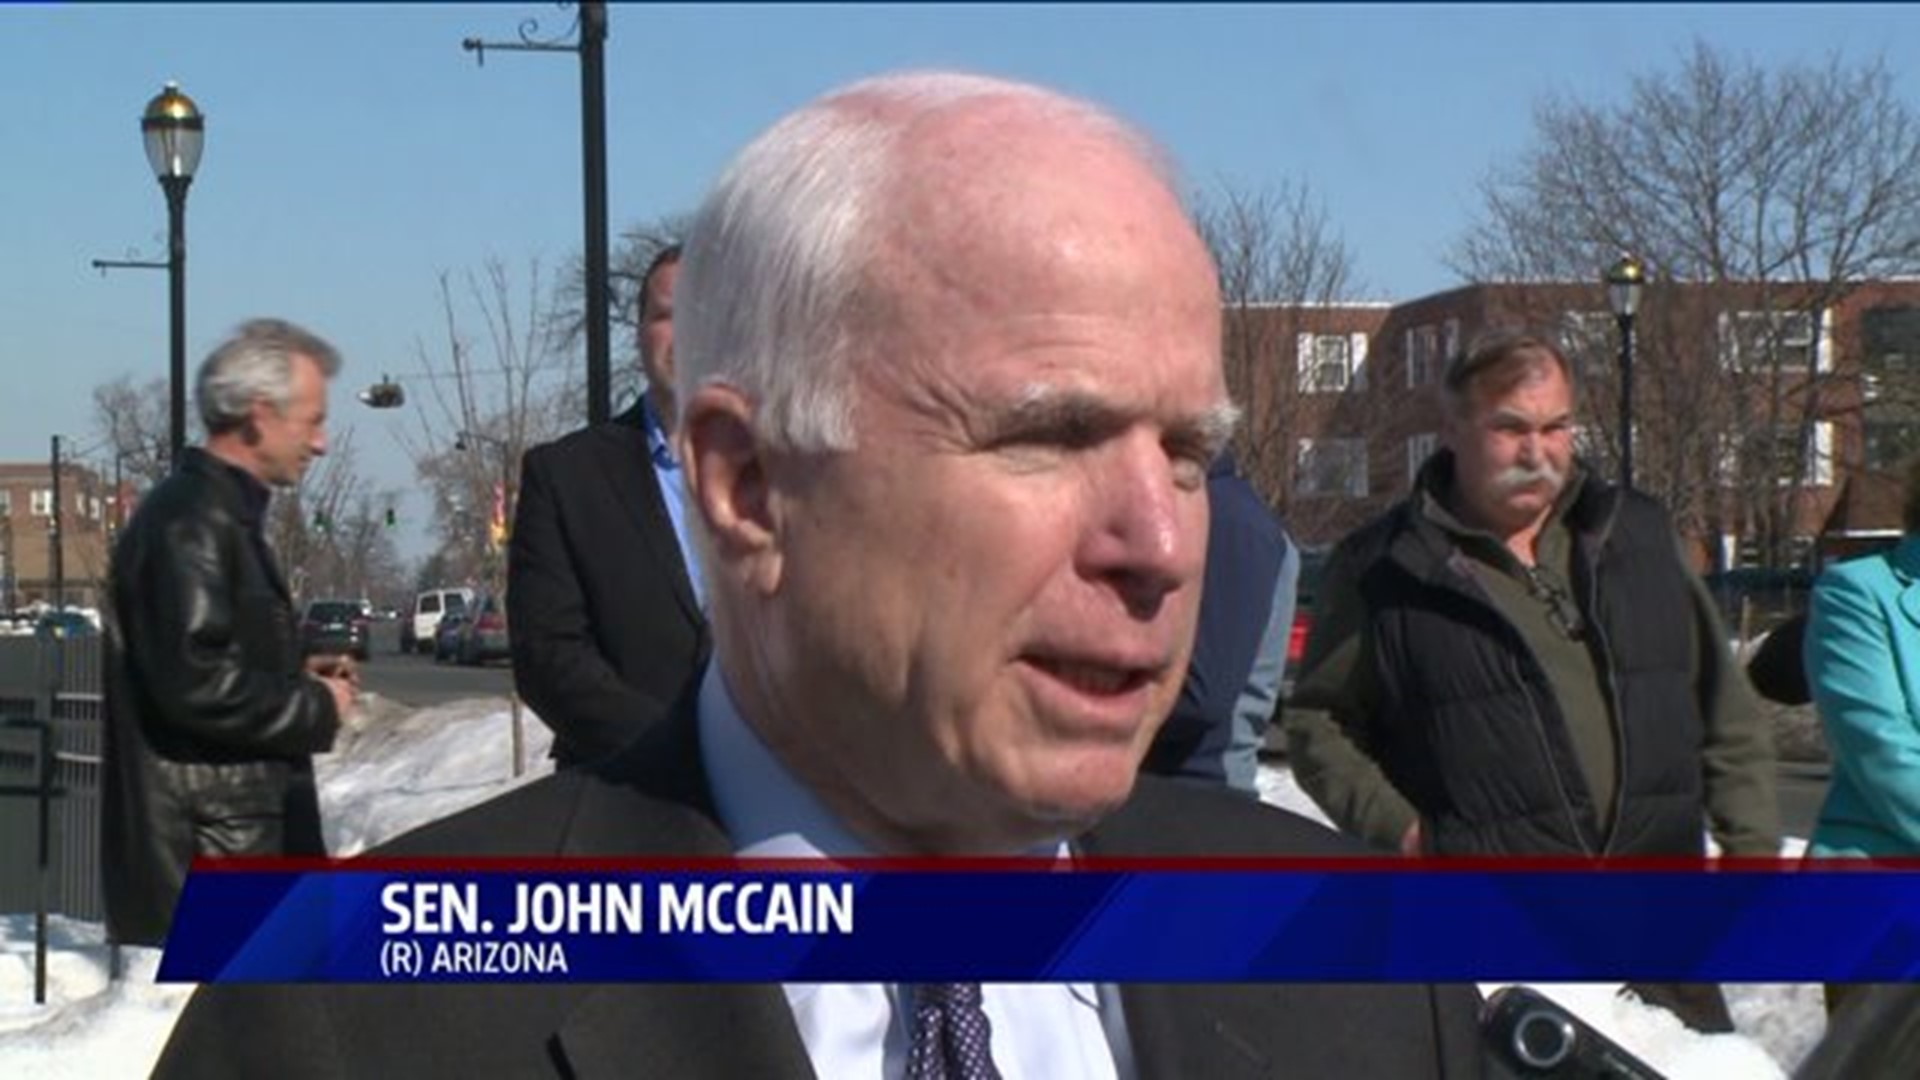 Sen. John McCain visits CT to discuss Ukraine crisis